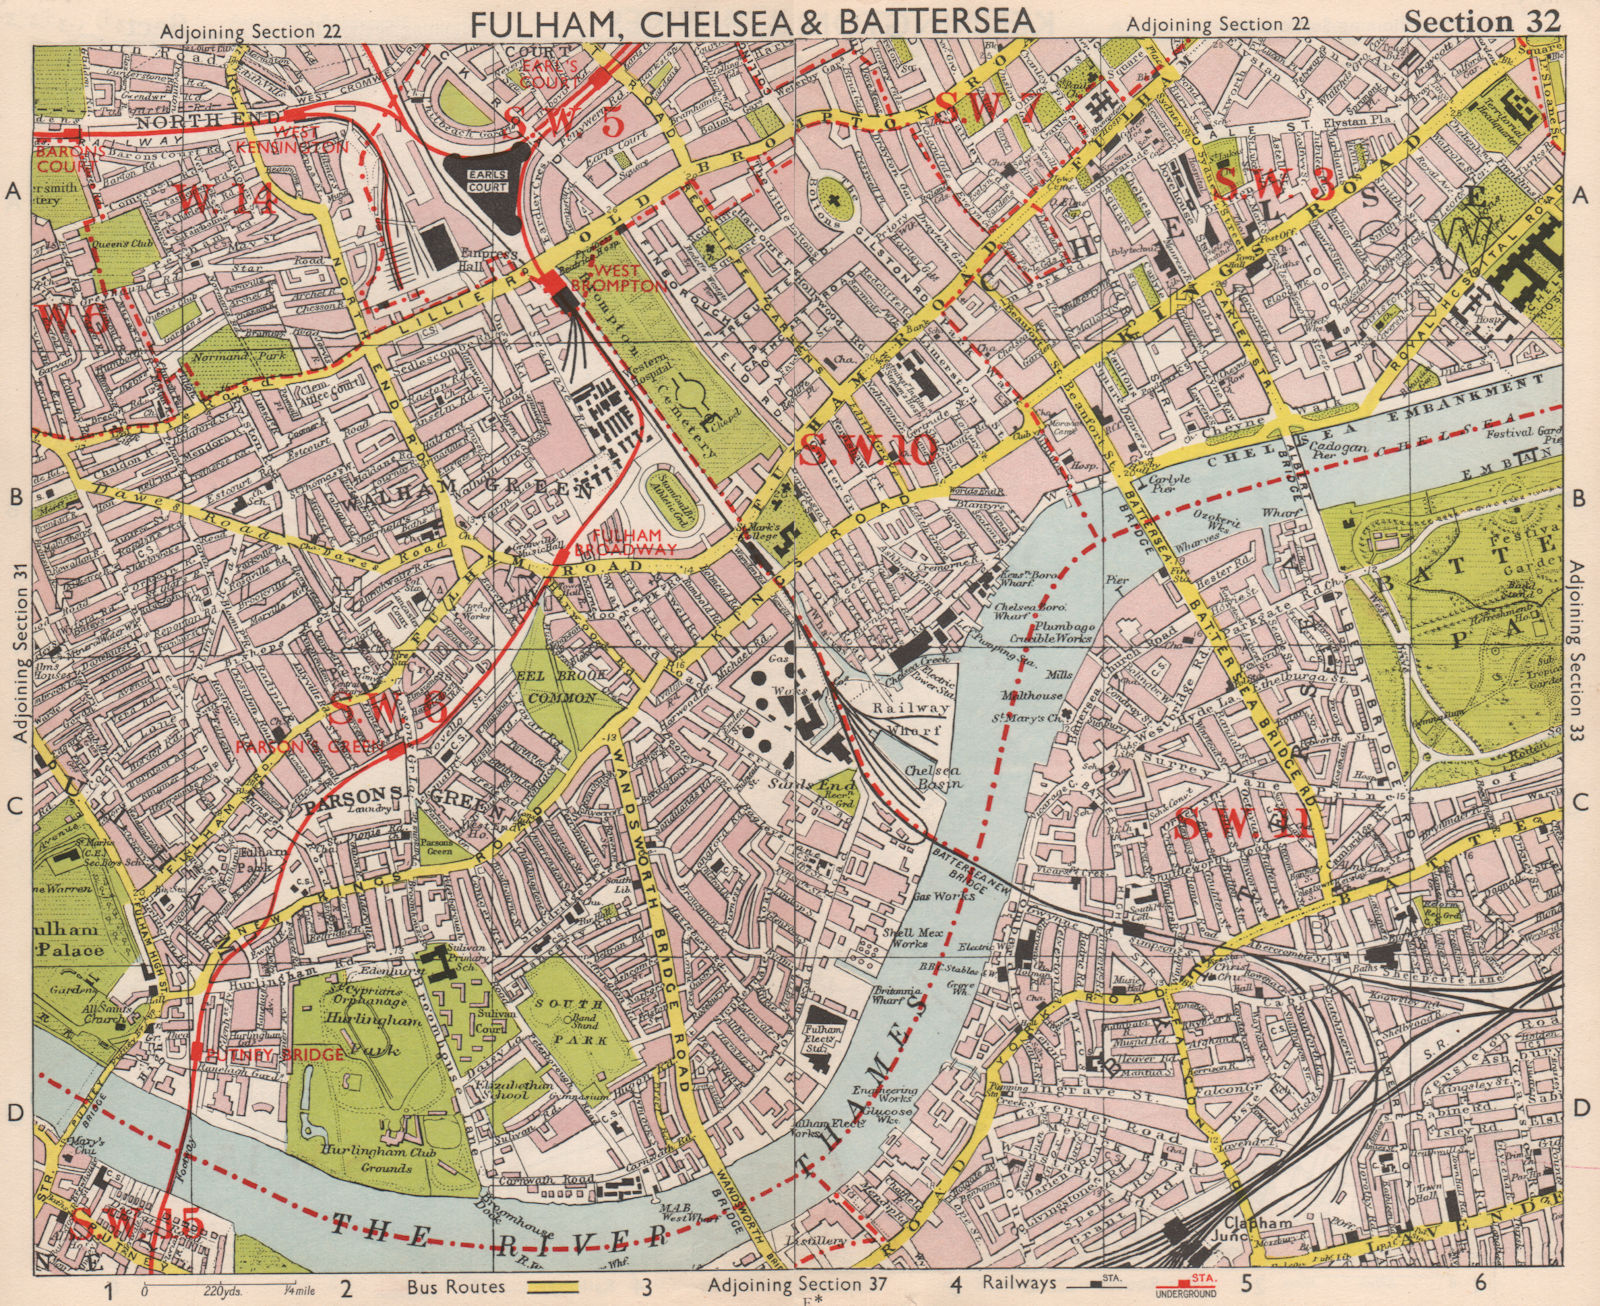 SW LONDON. Fulham Chelsea Battersea Walham/Parson's Green. BACON 1959 old map